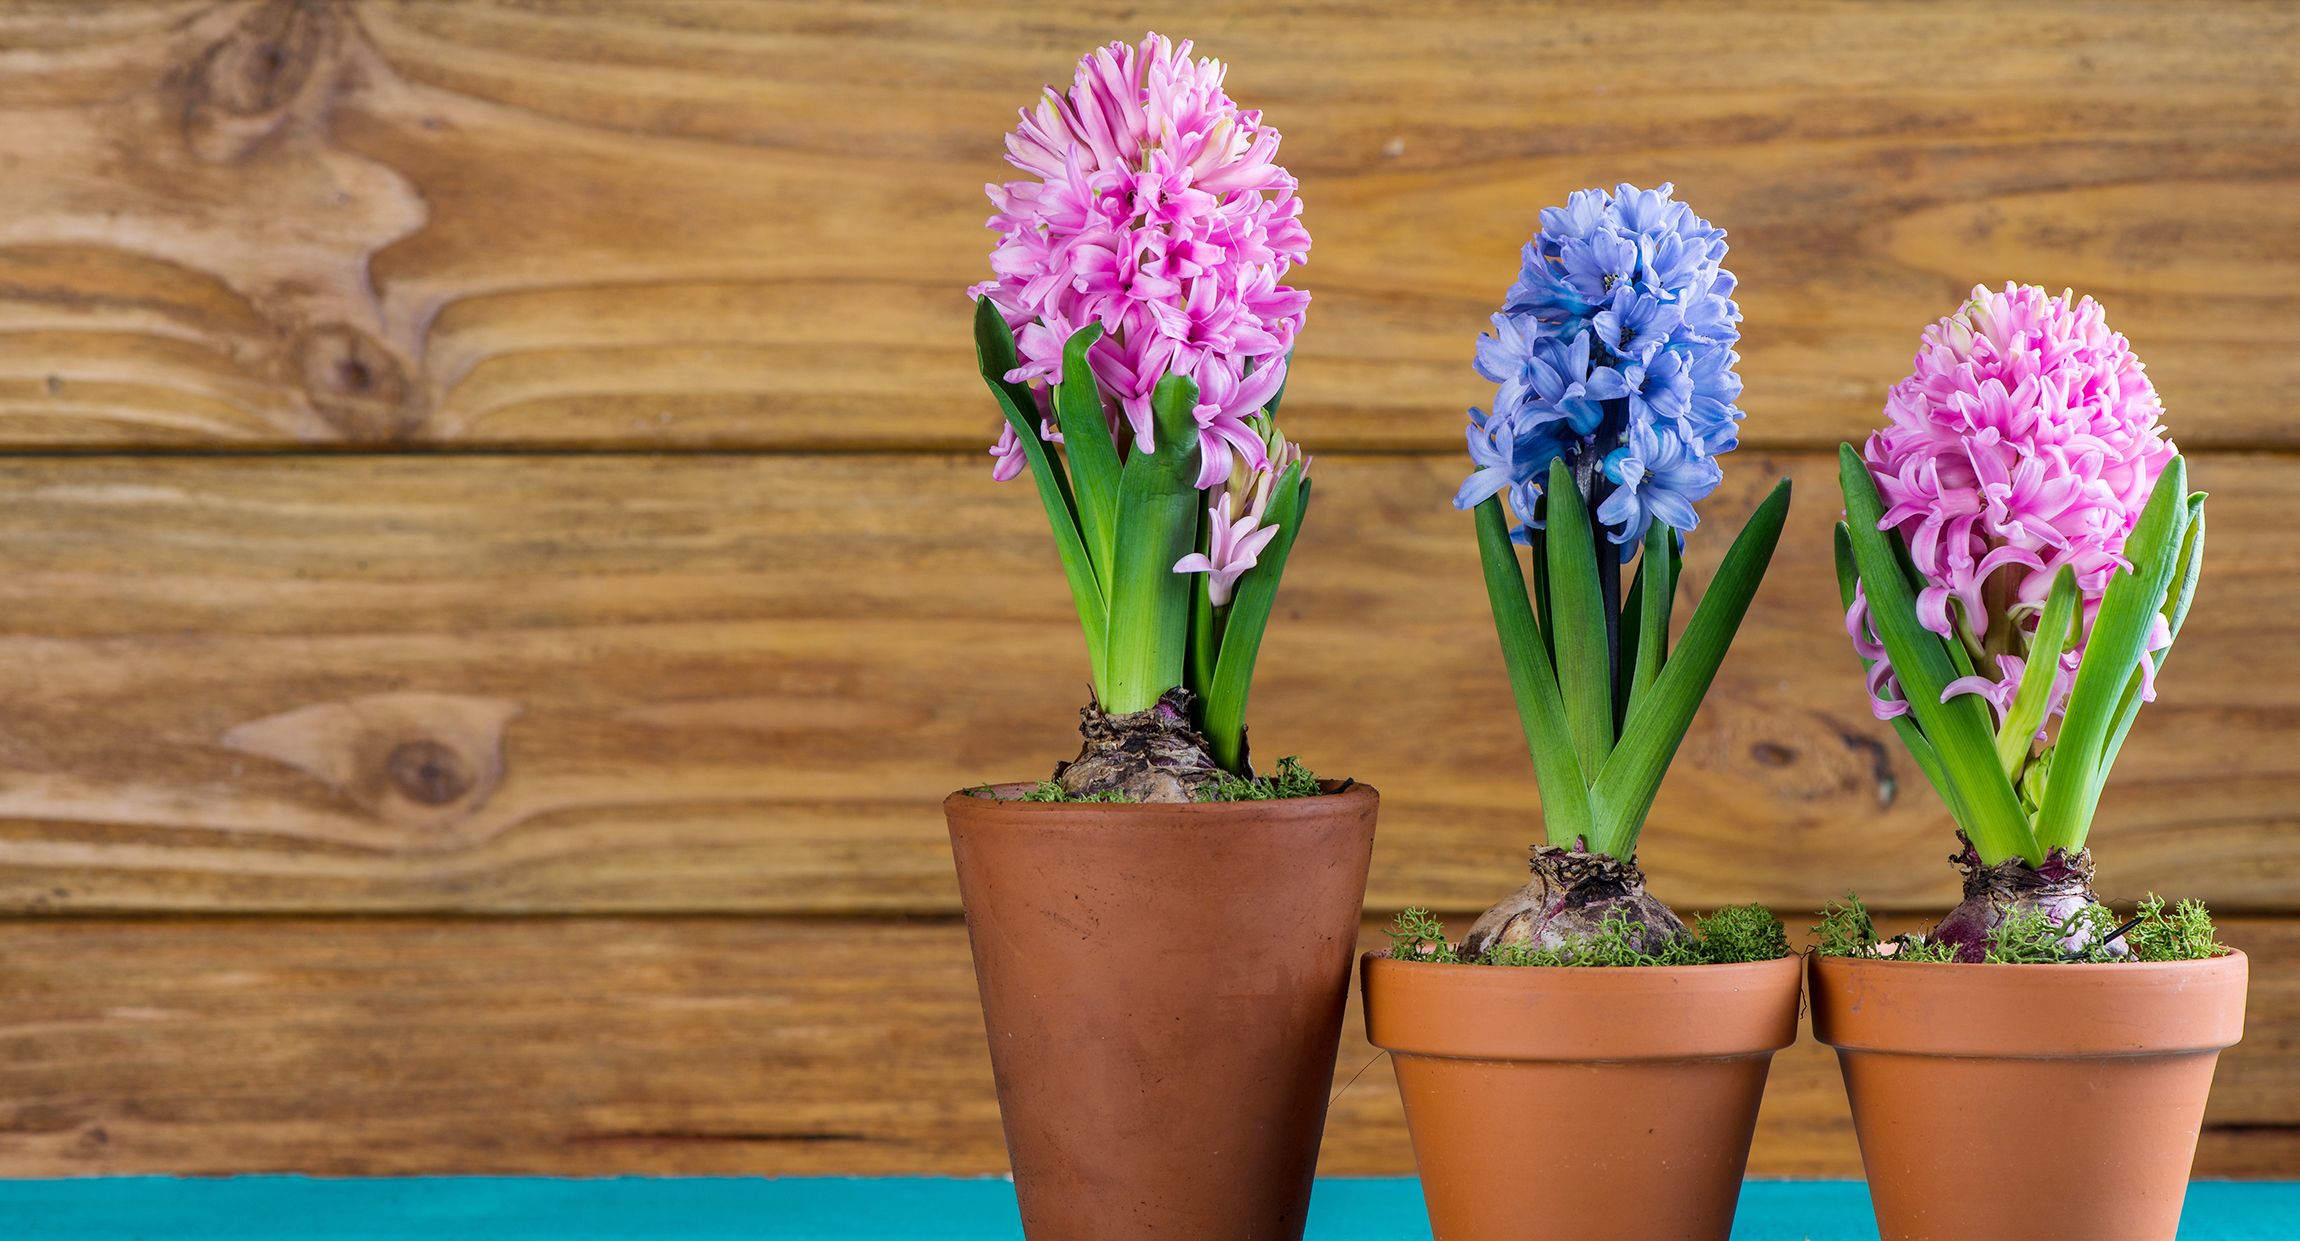 When to Plant Bulbs - Plant Tulip, Hyacinth, Daffodil Bulbs